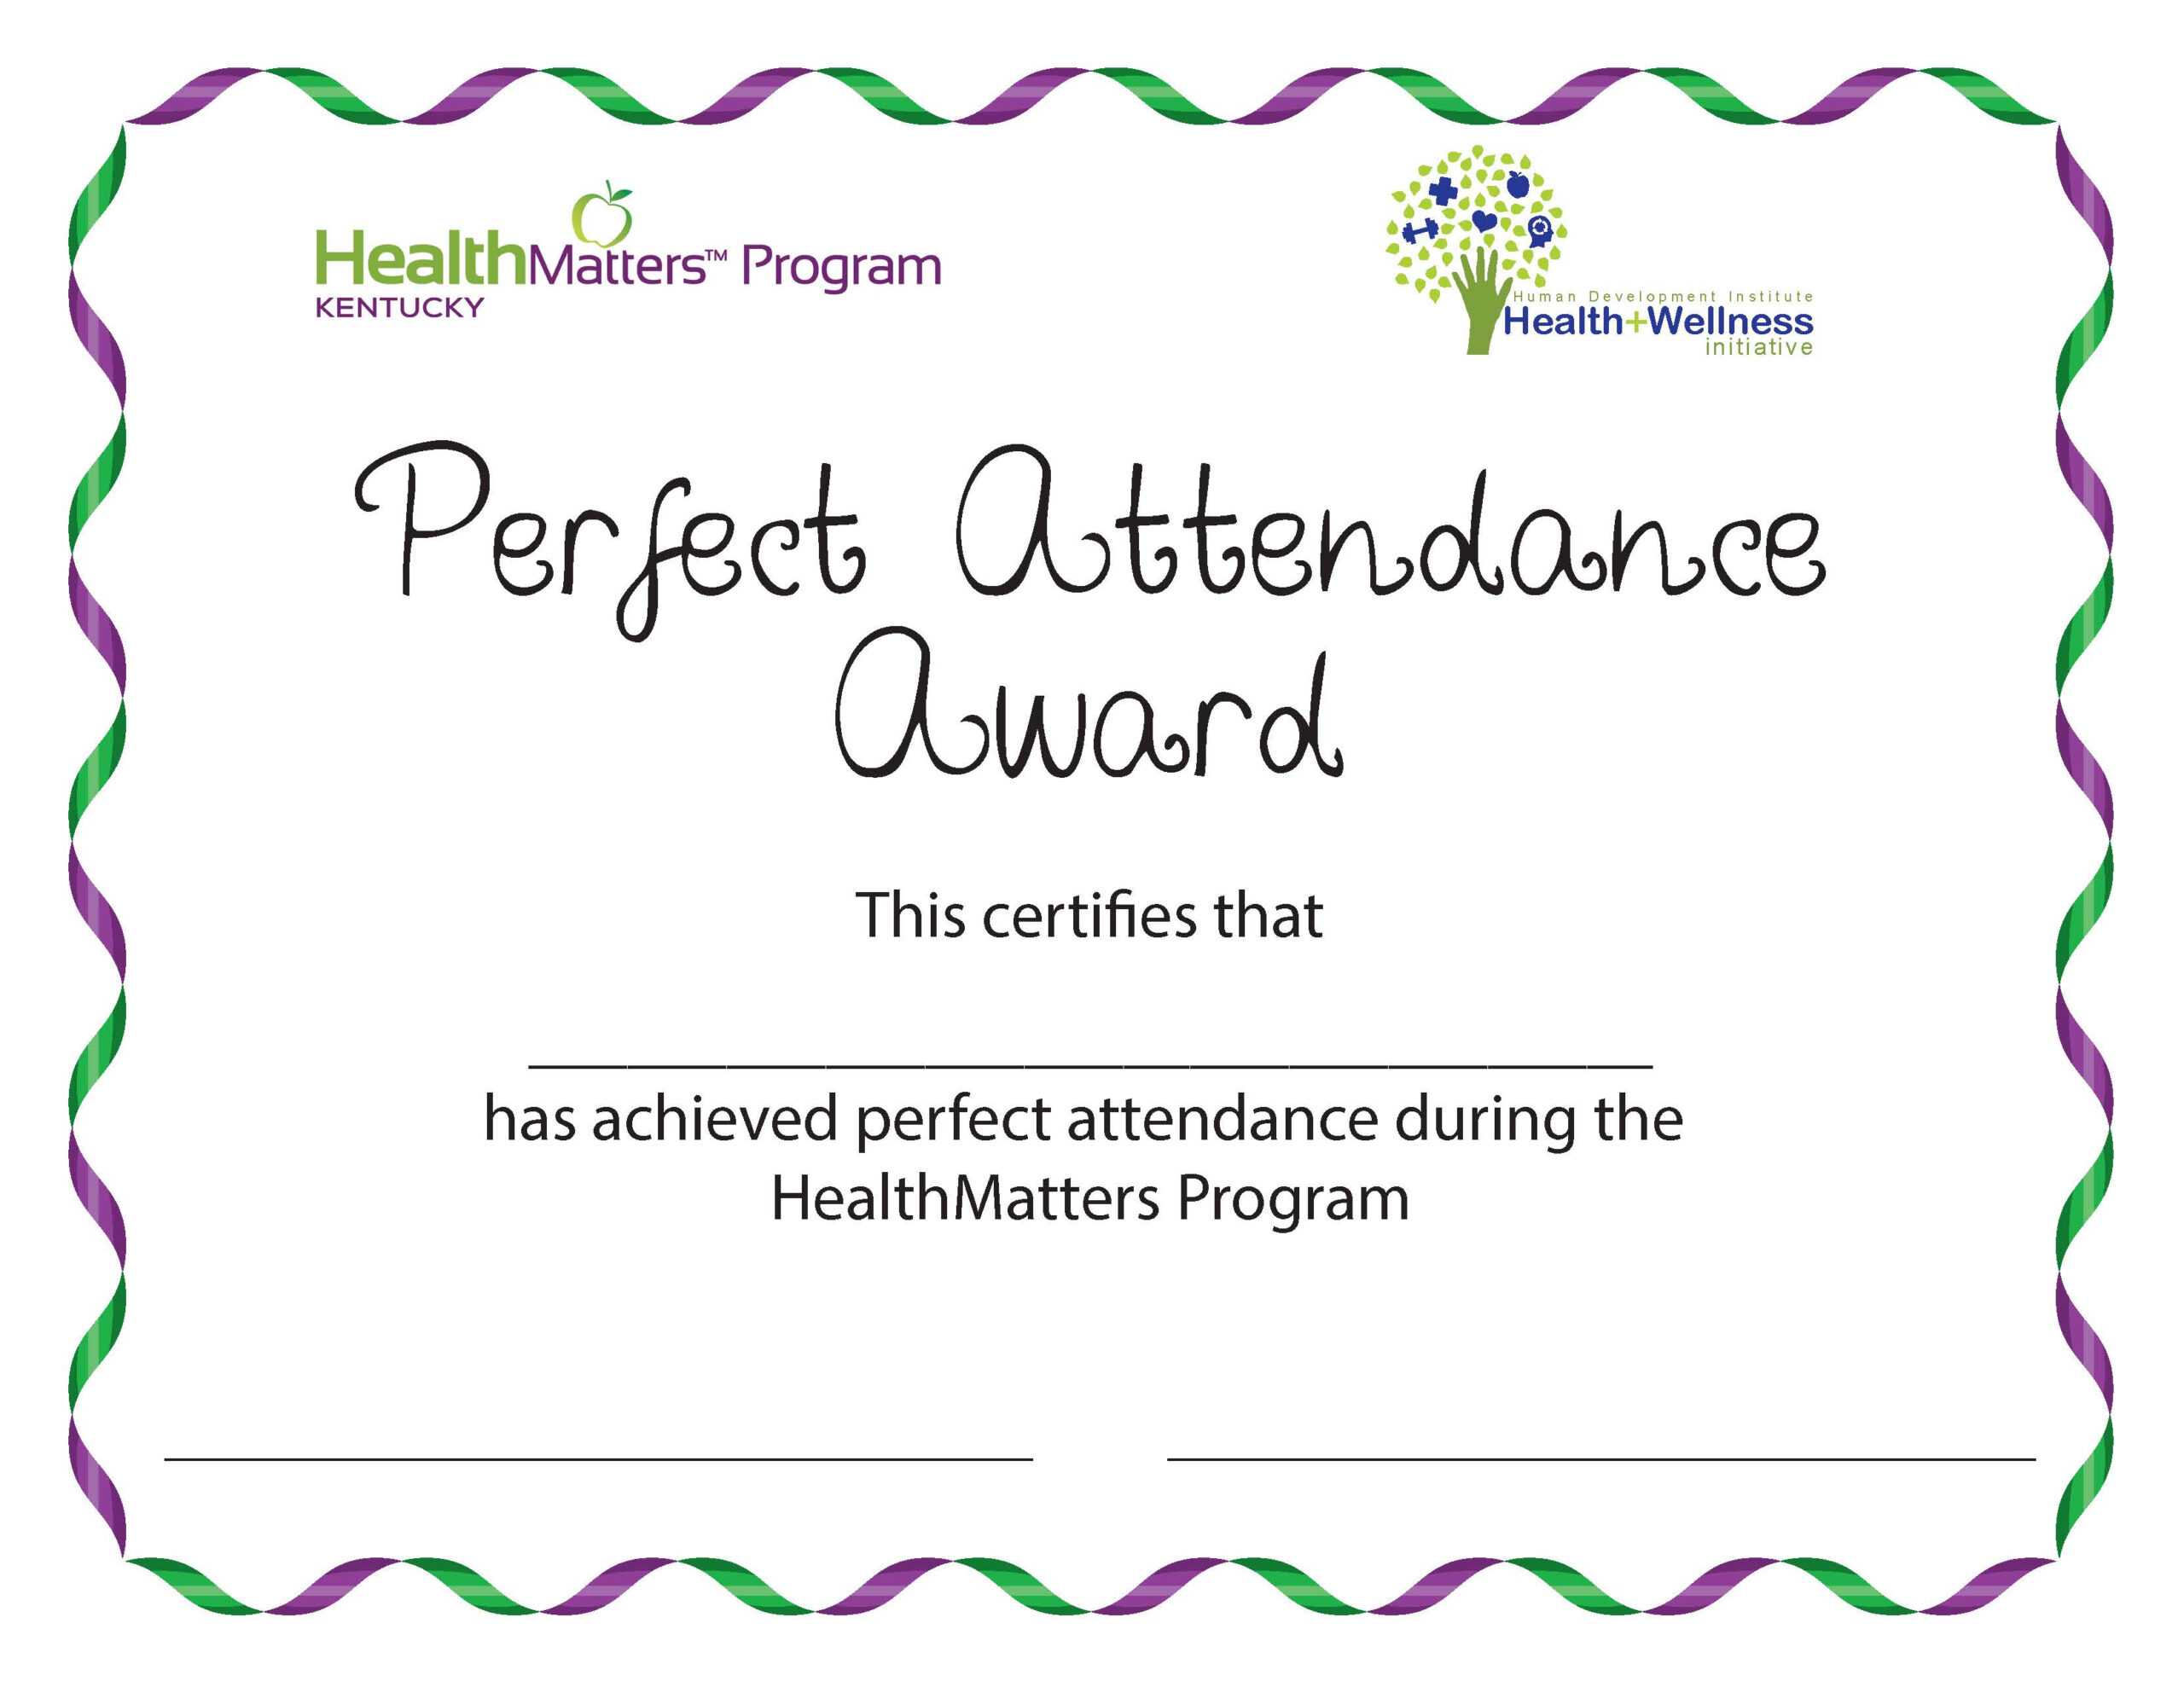 Healthmatters: Perfect Attendance Award – Health+Wellness For Perfect Attendance Certificate Template